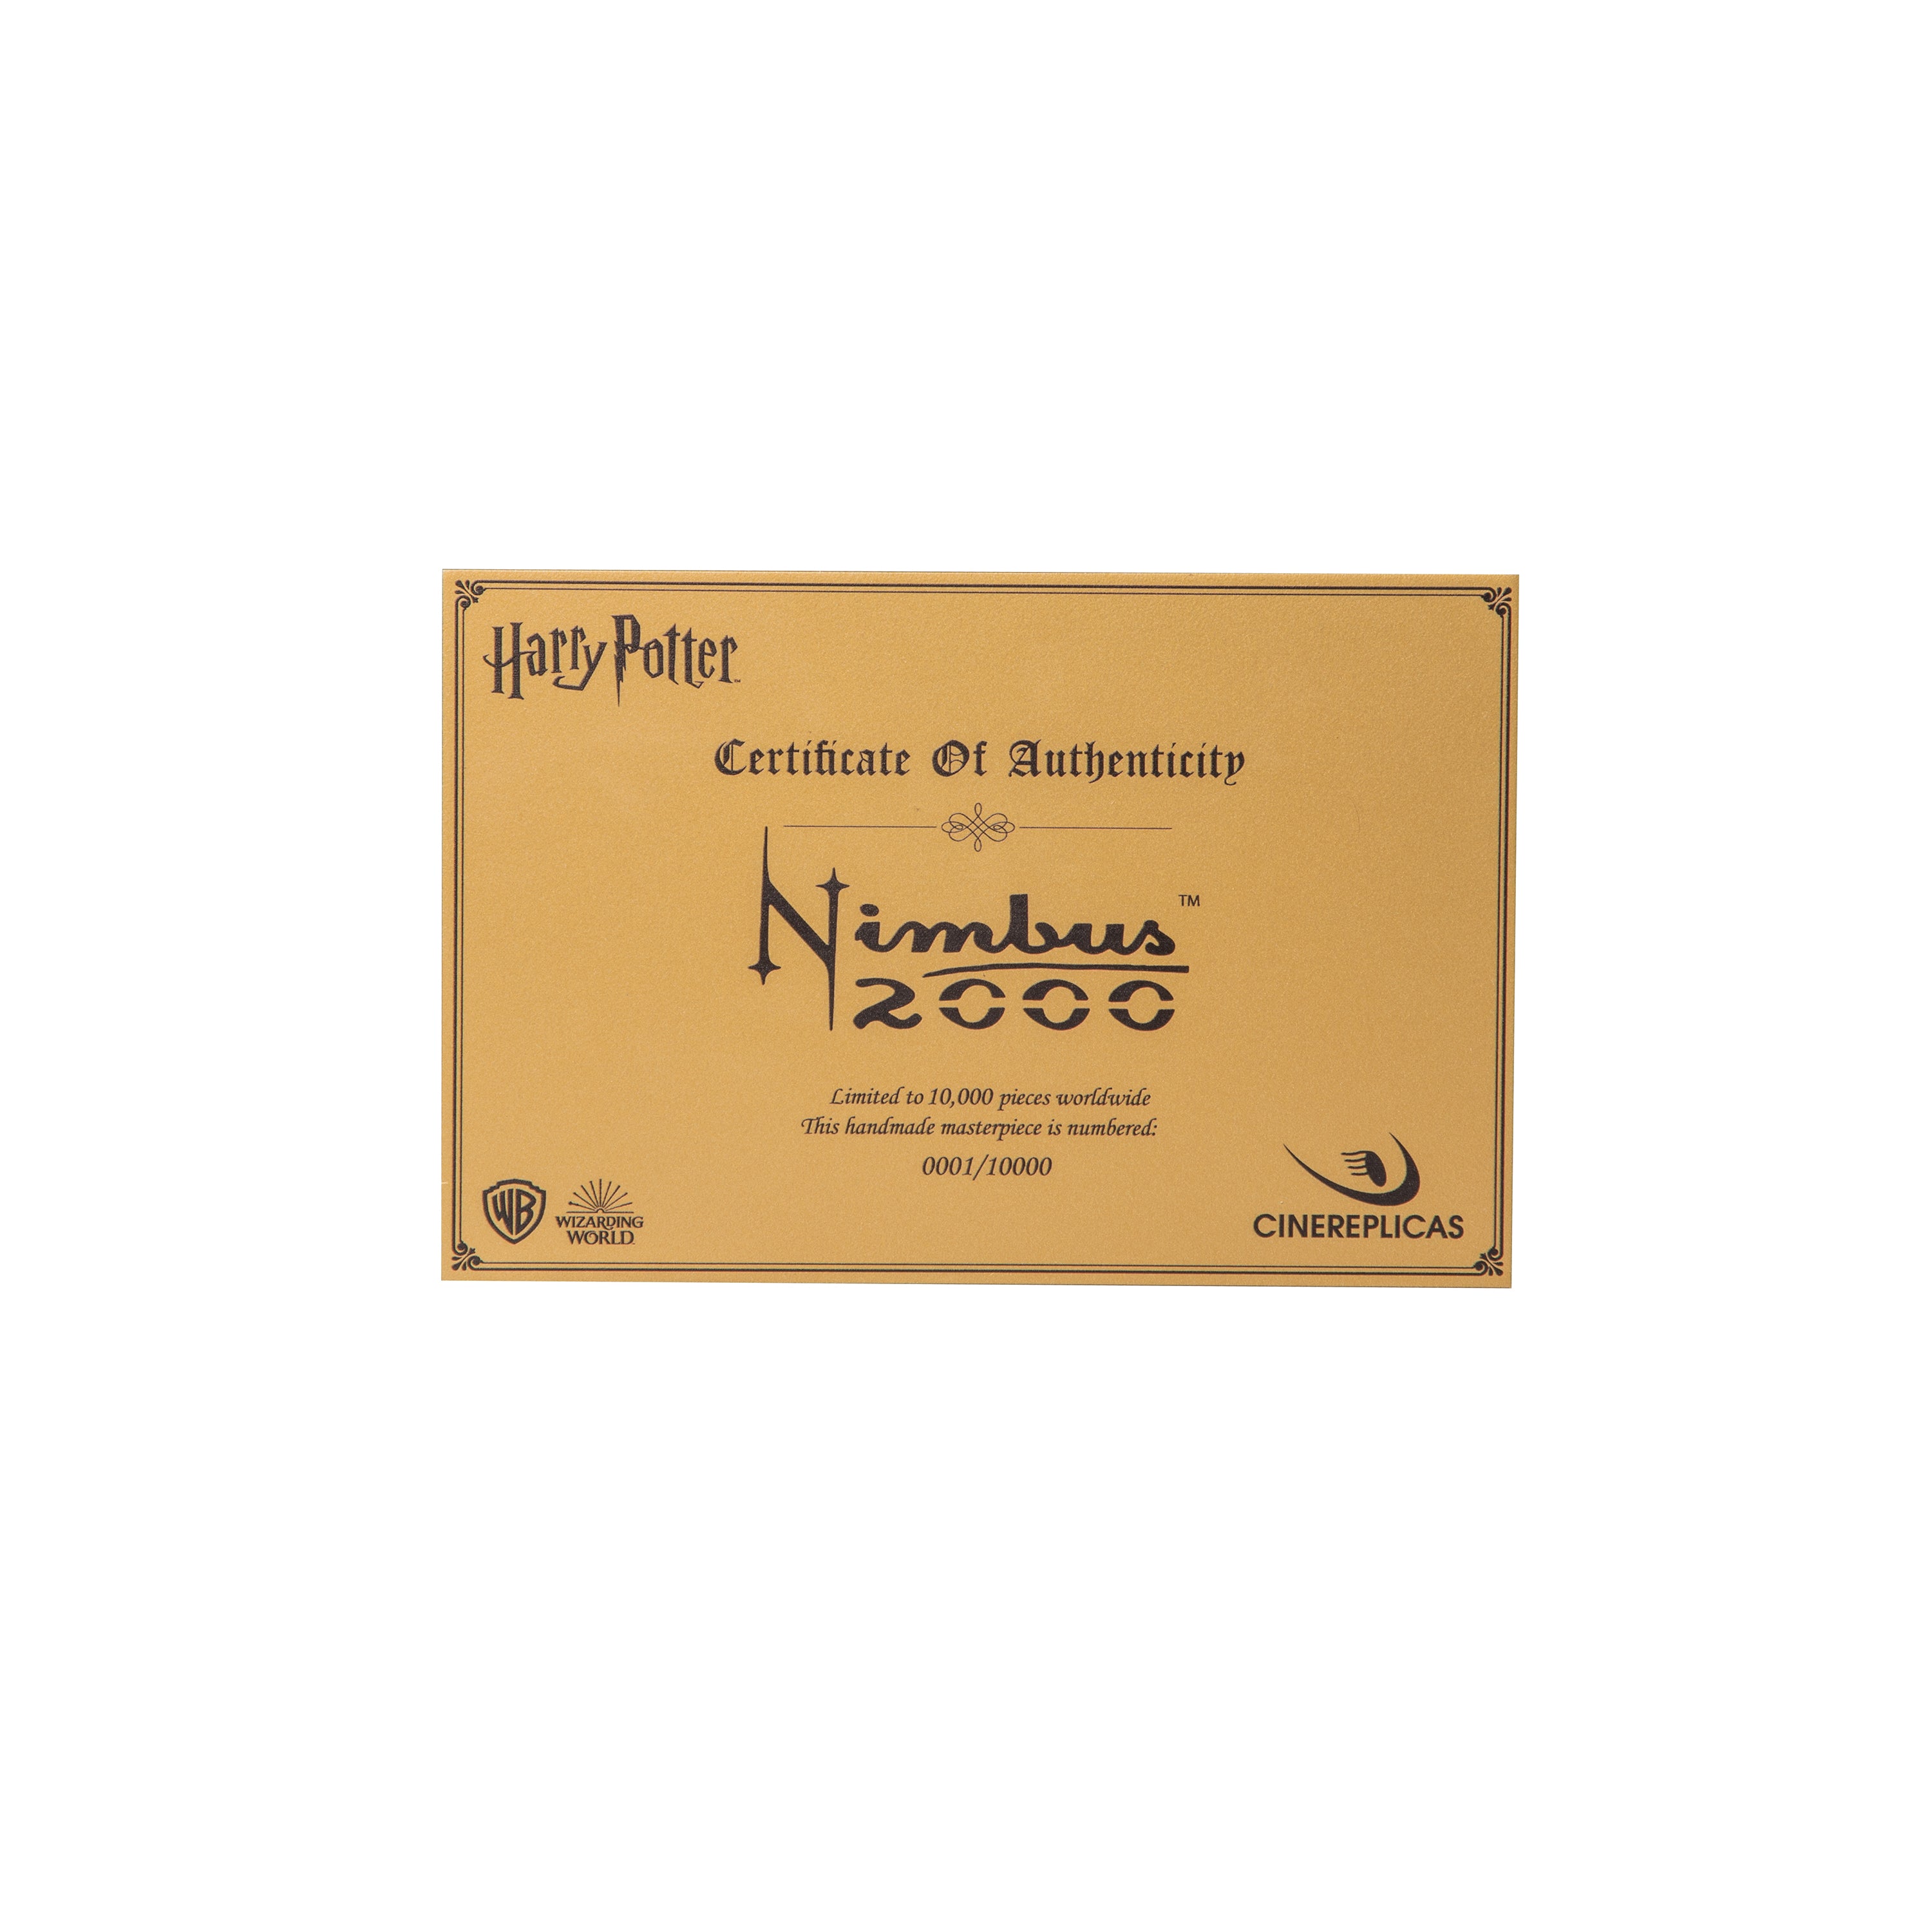 Bolígrafo escoba Nimbus 2000 Harry Potter por 22,90€ –